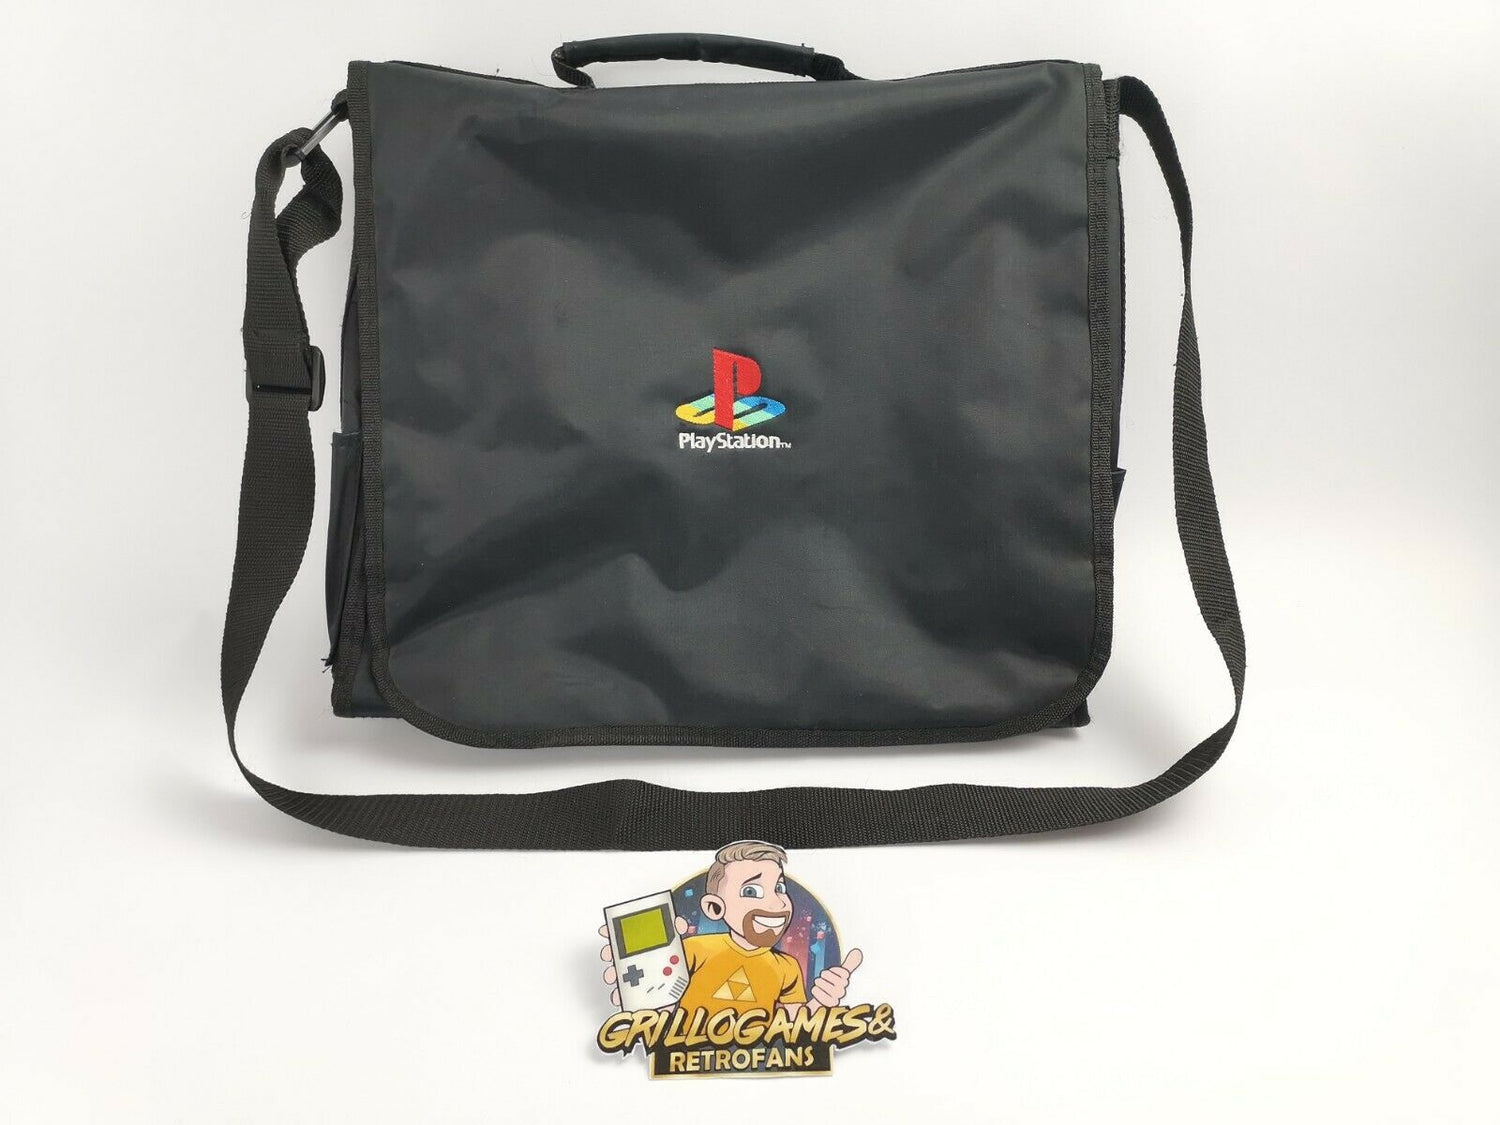 Sony Playstation 1 shoulder bag | Console Bag Carry Bag | PS1 Psx